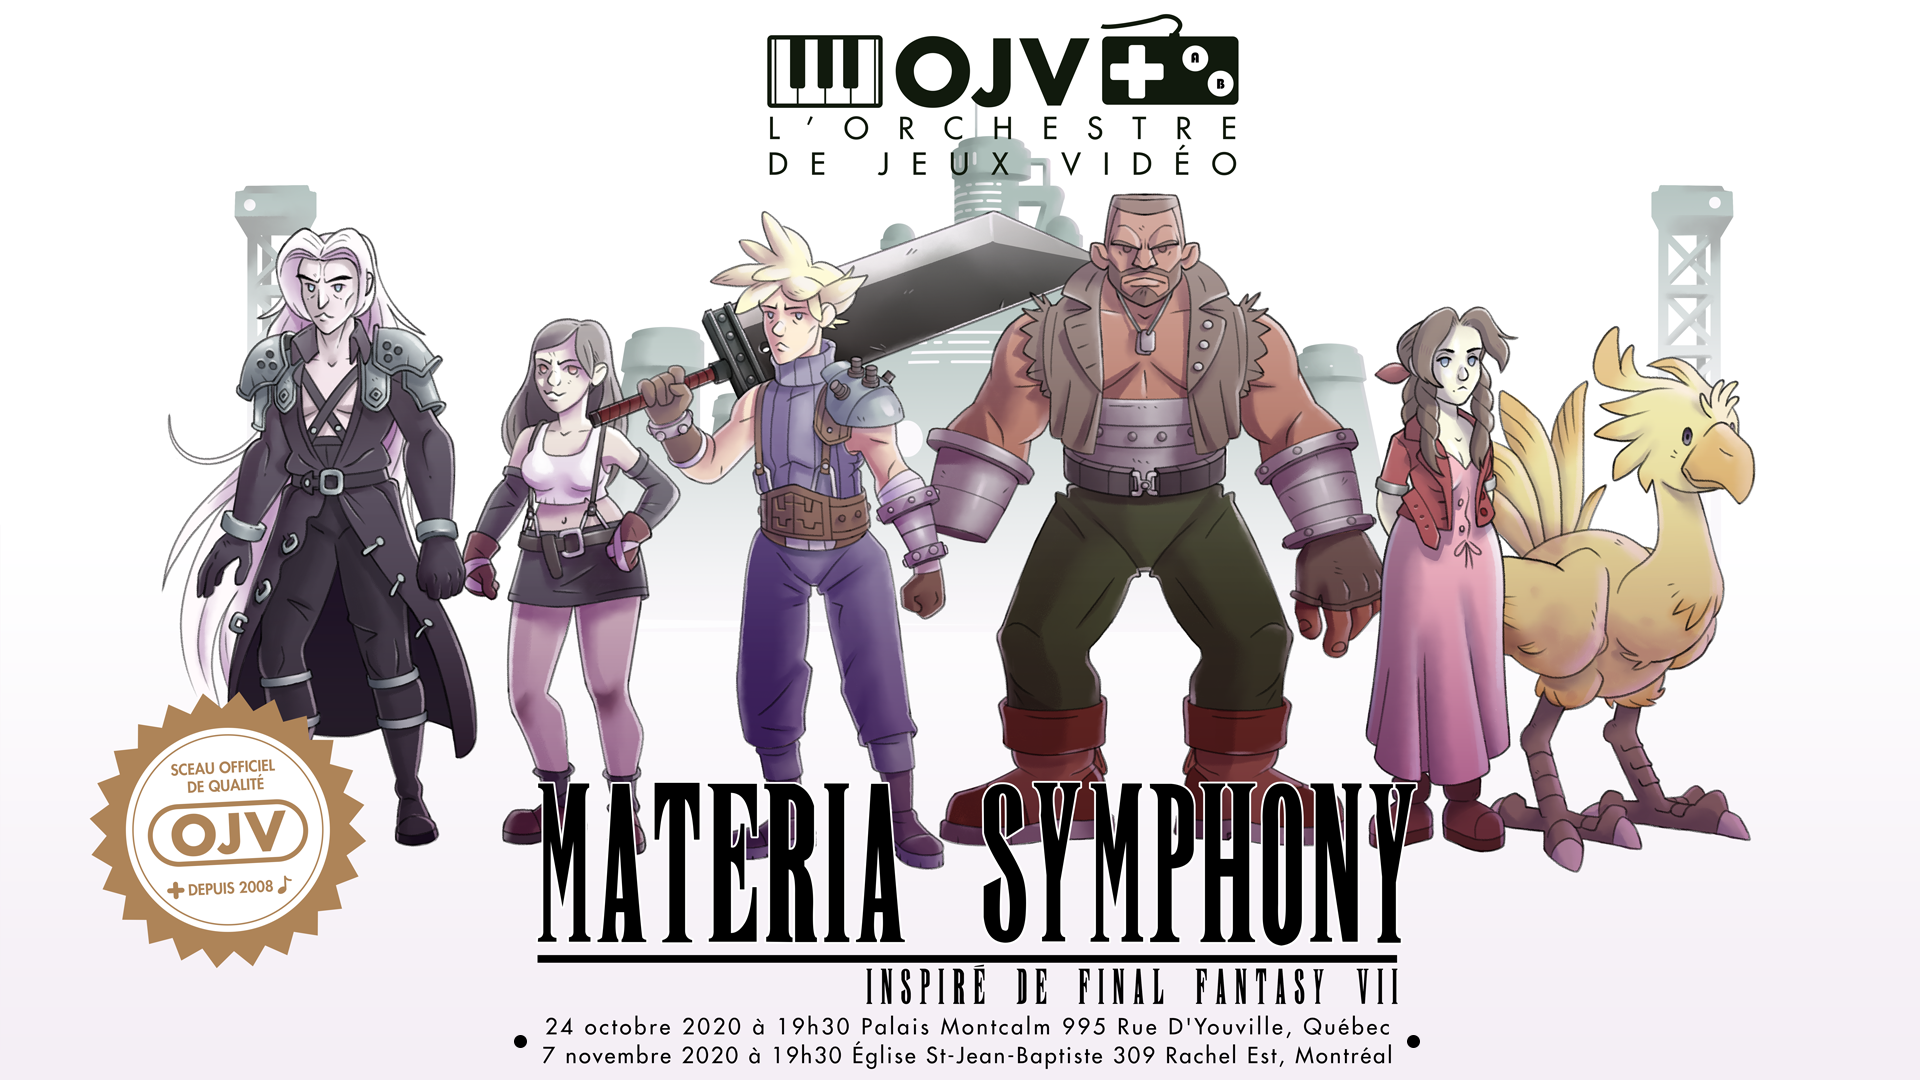 Concert Materia Symphony Inspirée de Final Fantasy VII Orchestre de